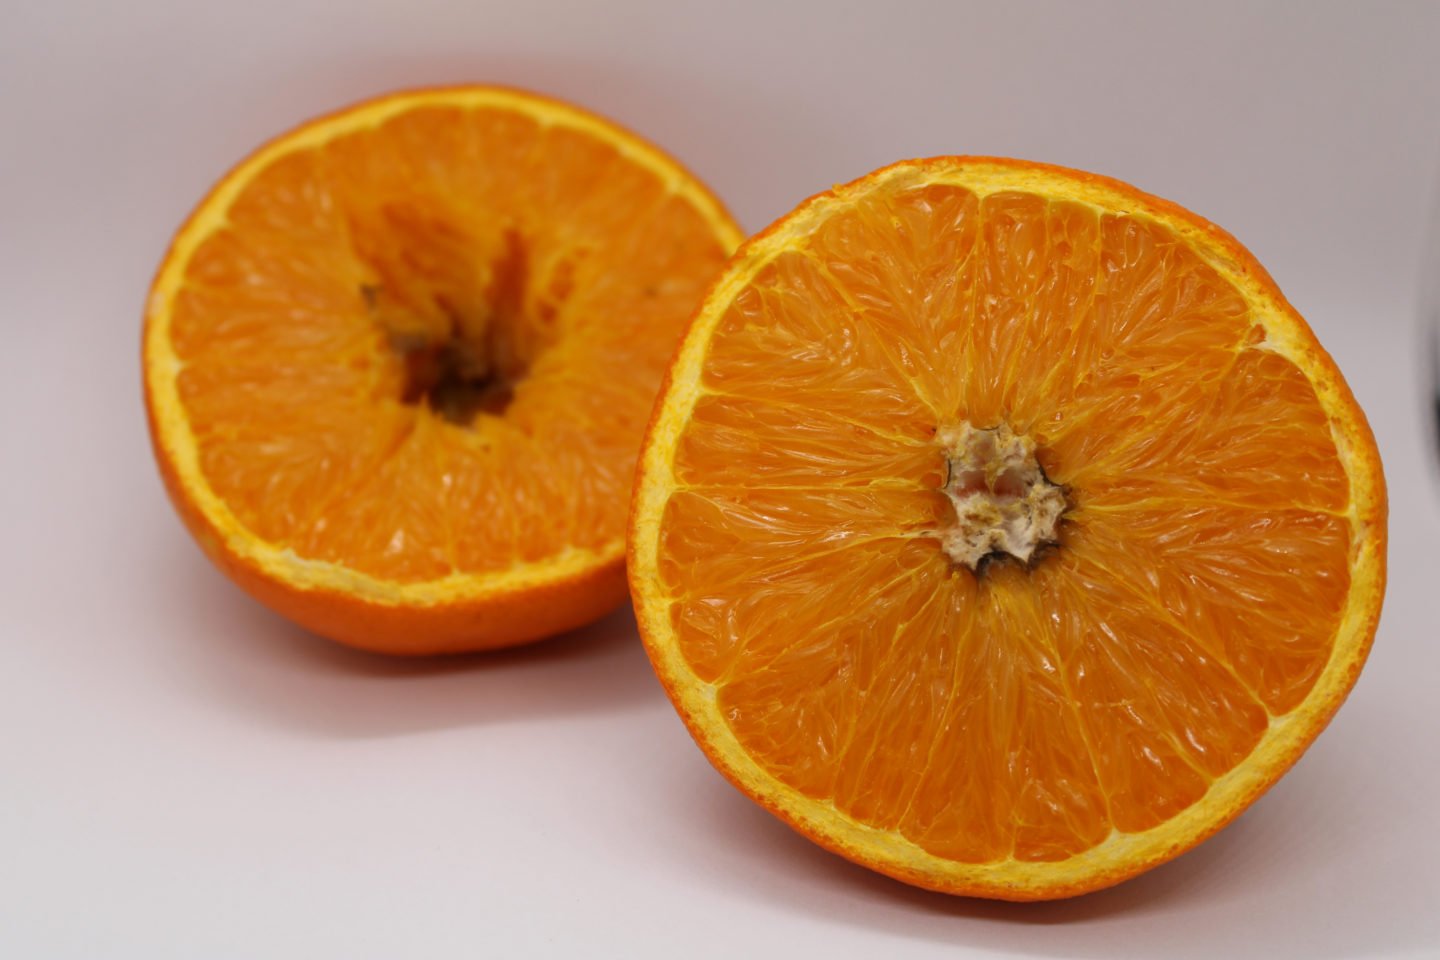 Juicy Orange With Rotten Core